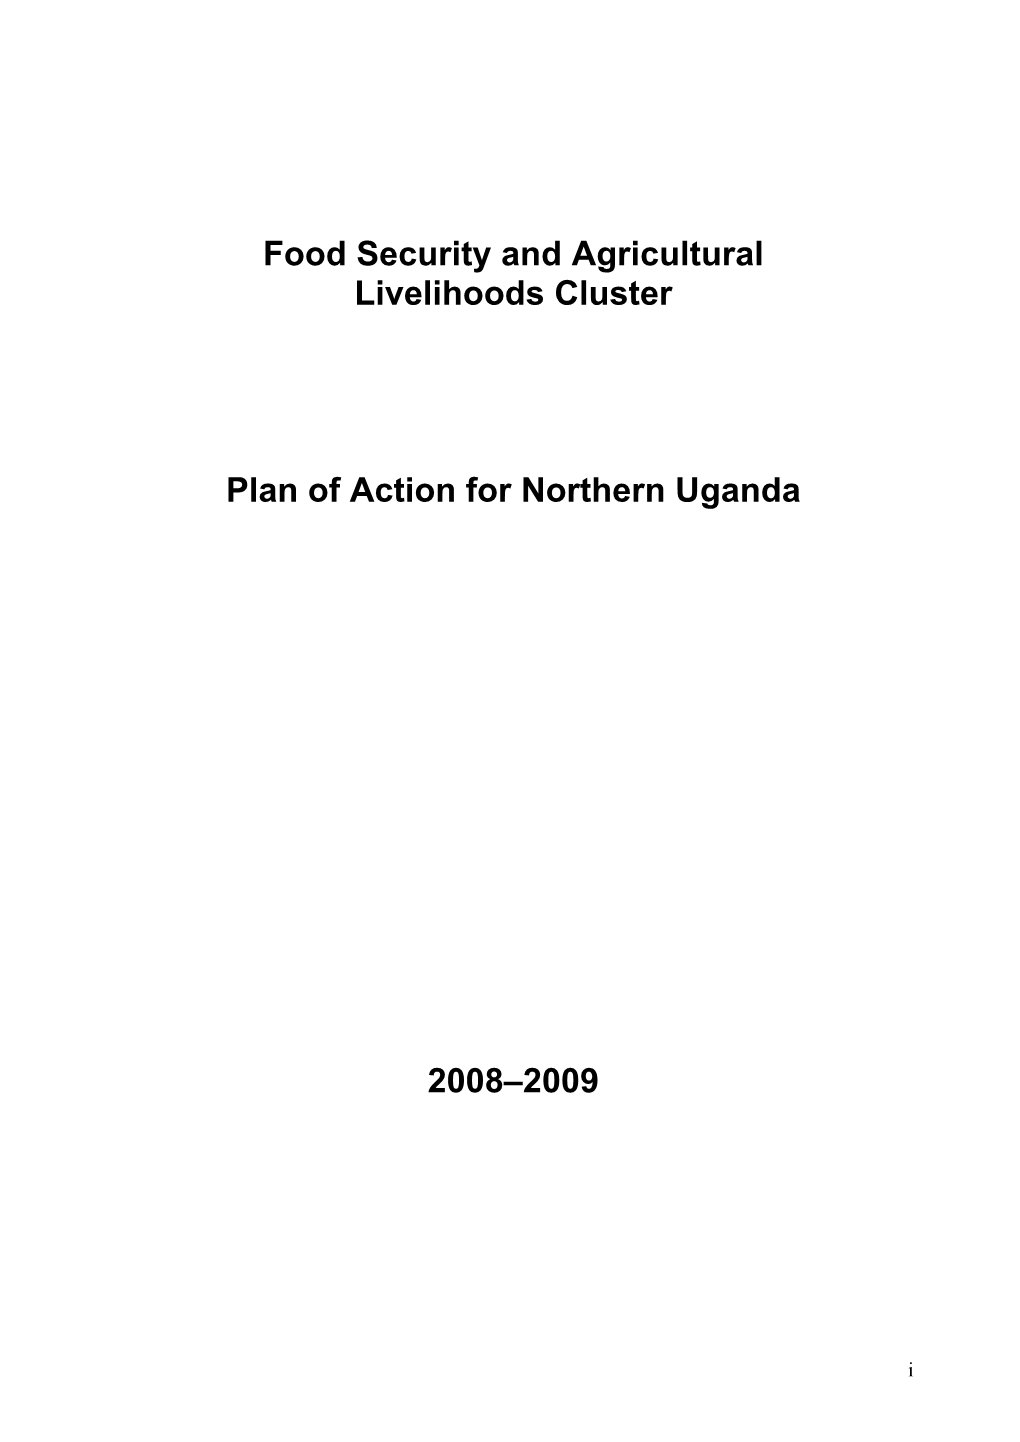 Plan of Action for Northern Uganda